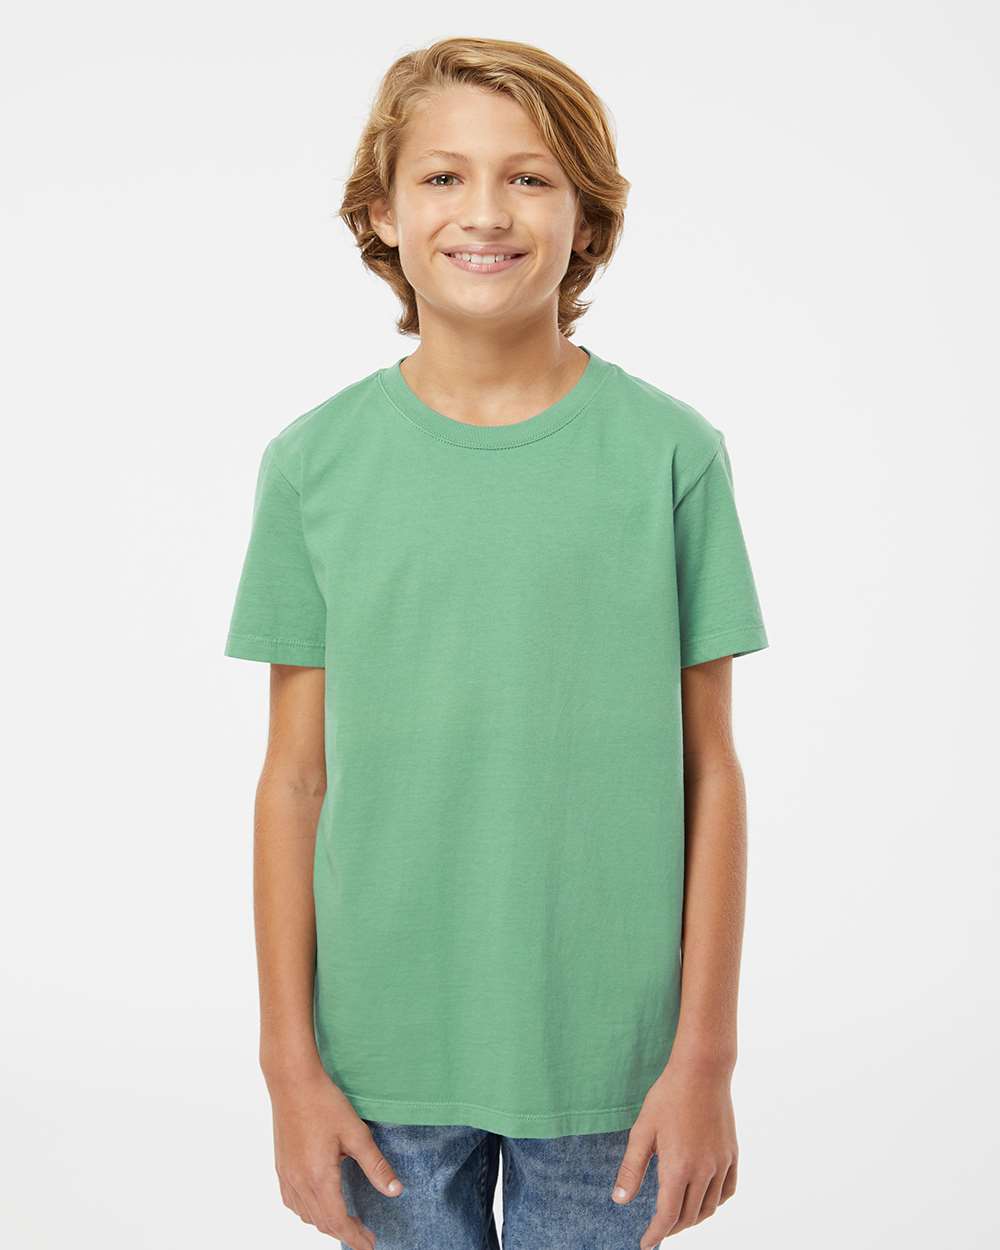 Softshirts® Youth Organic Cotton T-shirt